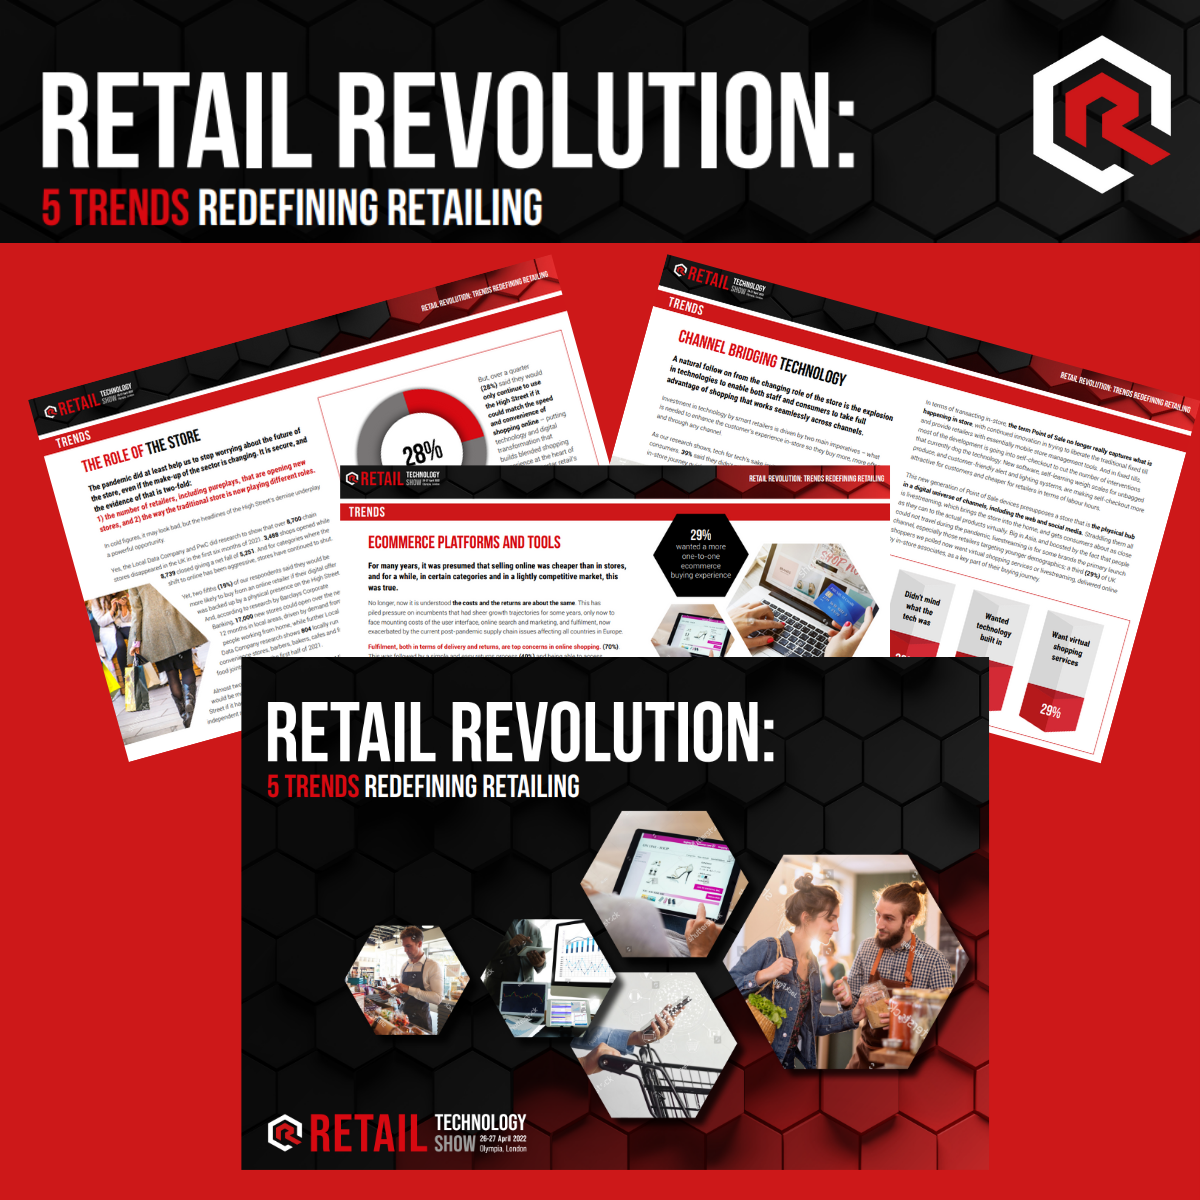 Retail Revolution: 5 trends redefining retail market report